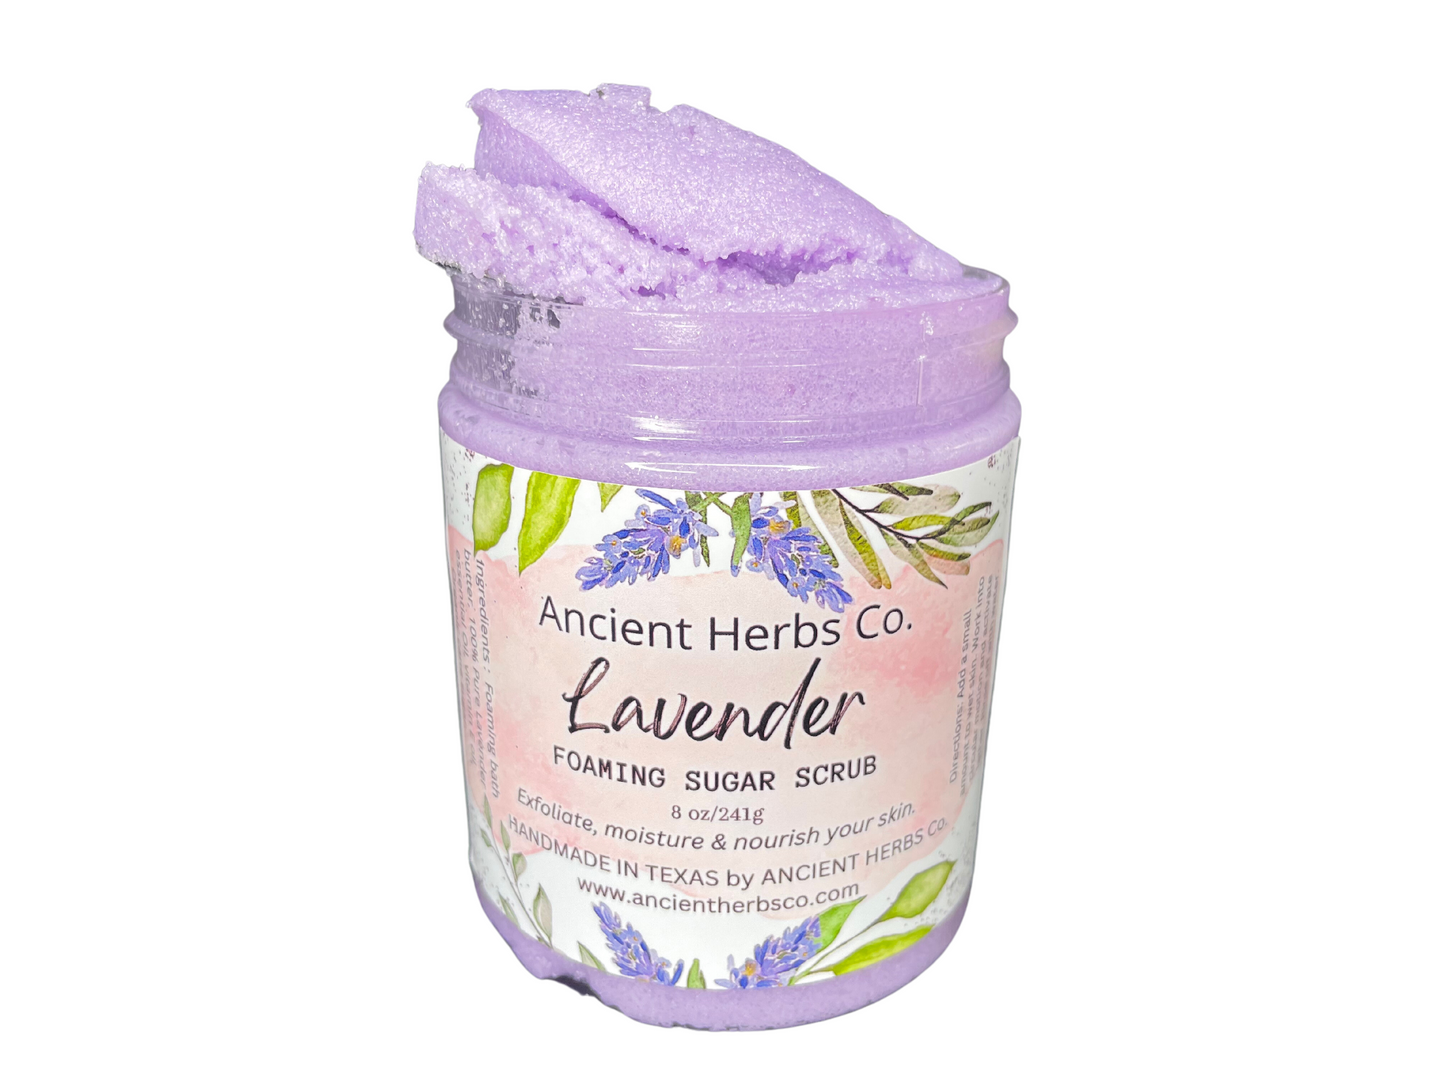 Lavender body scrub 8 oz